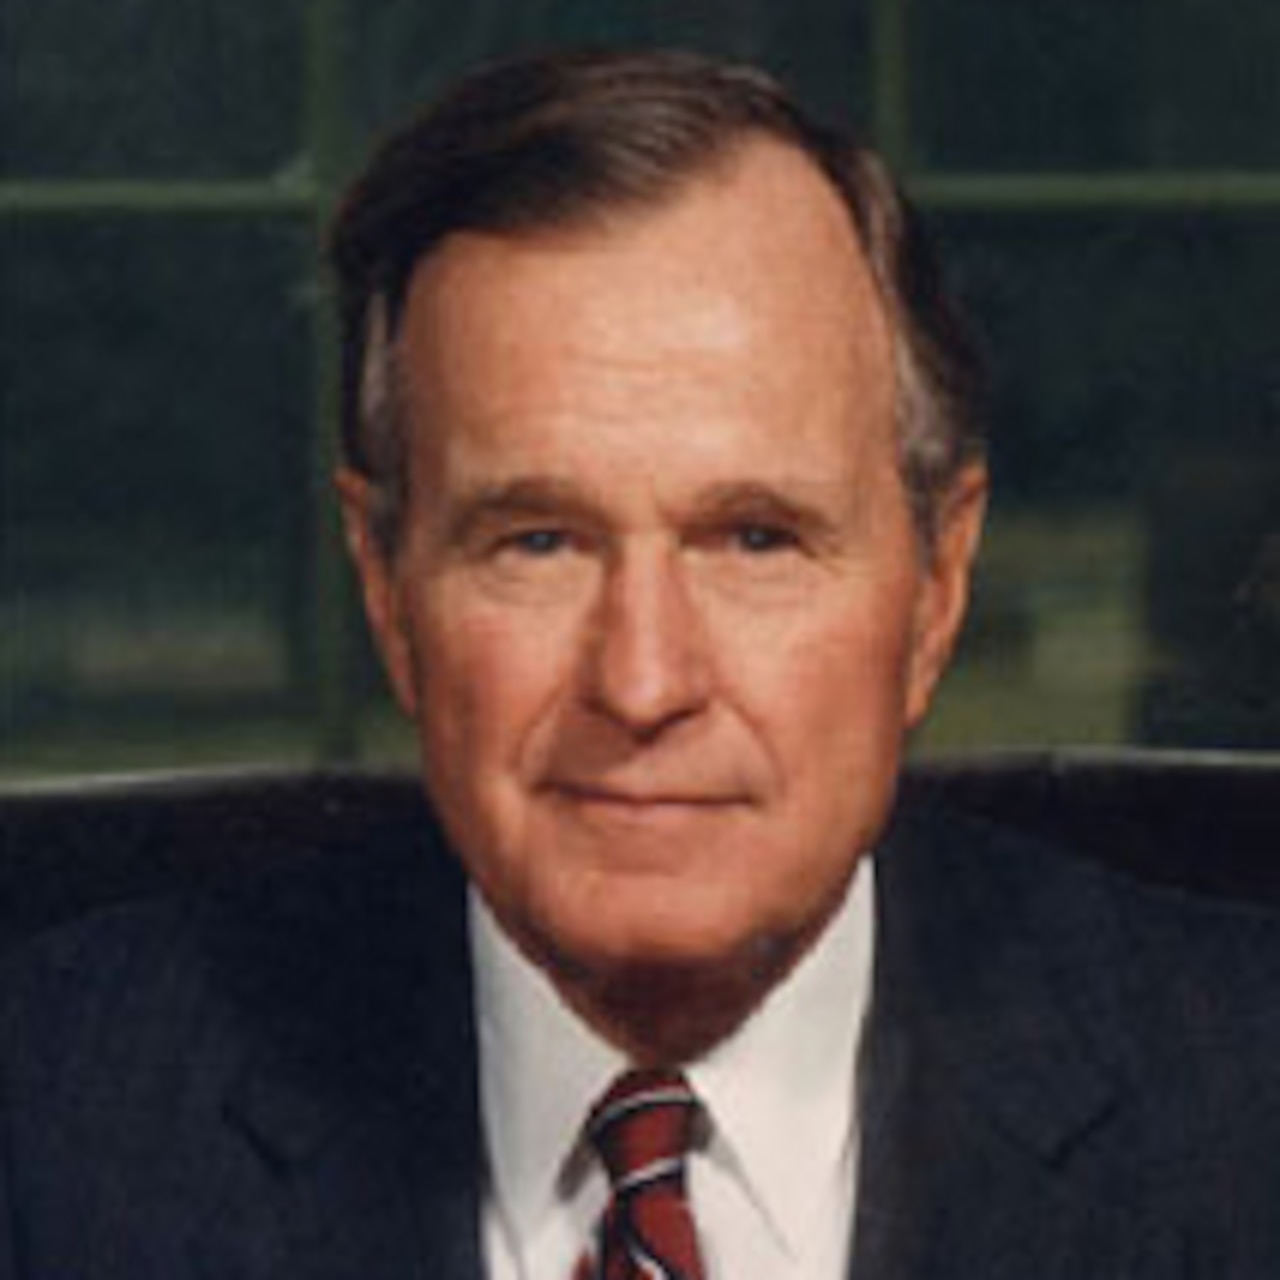 A graphic of George H.W. Bush